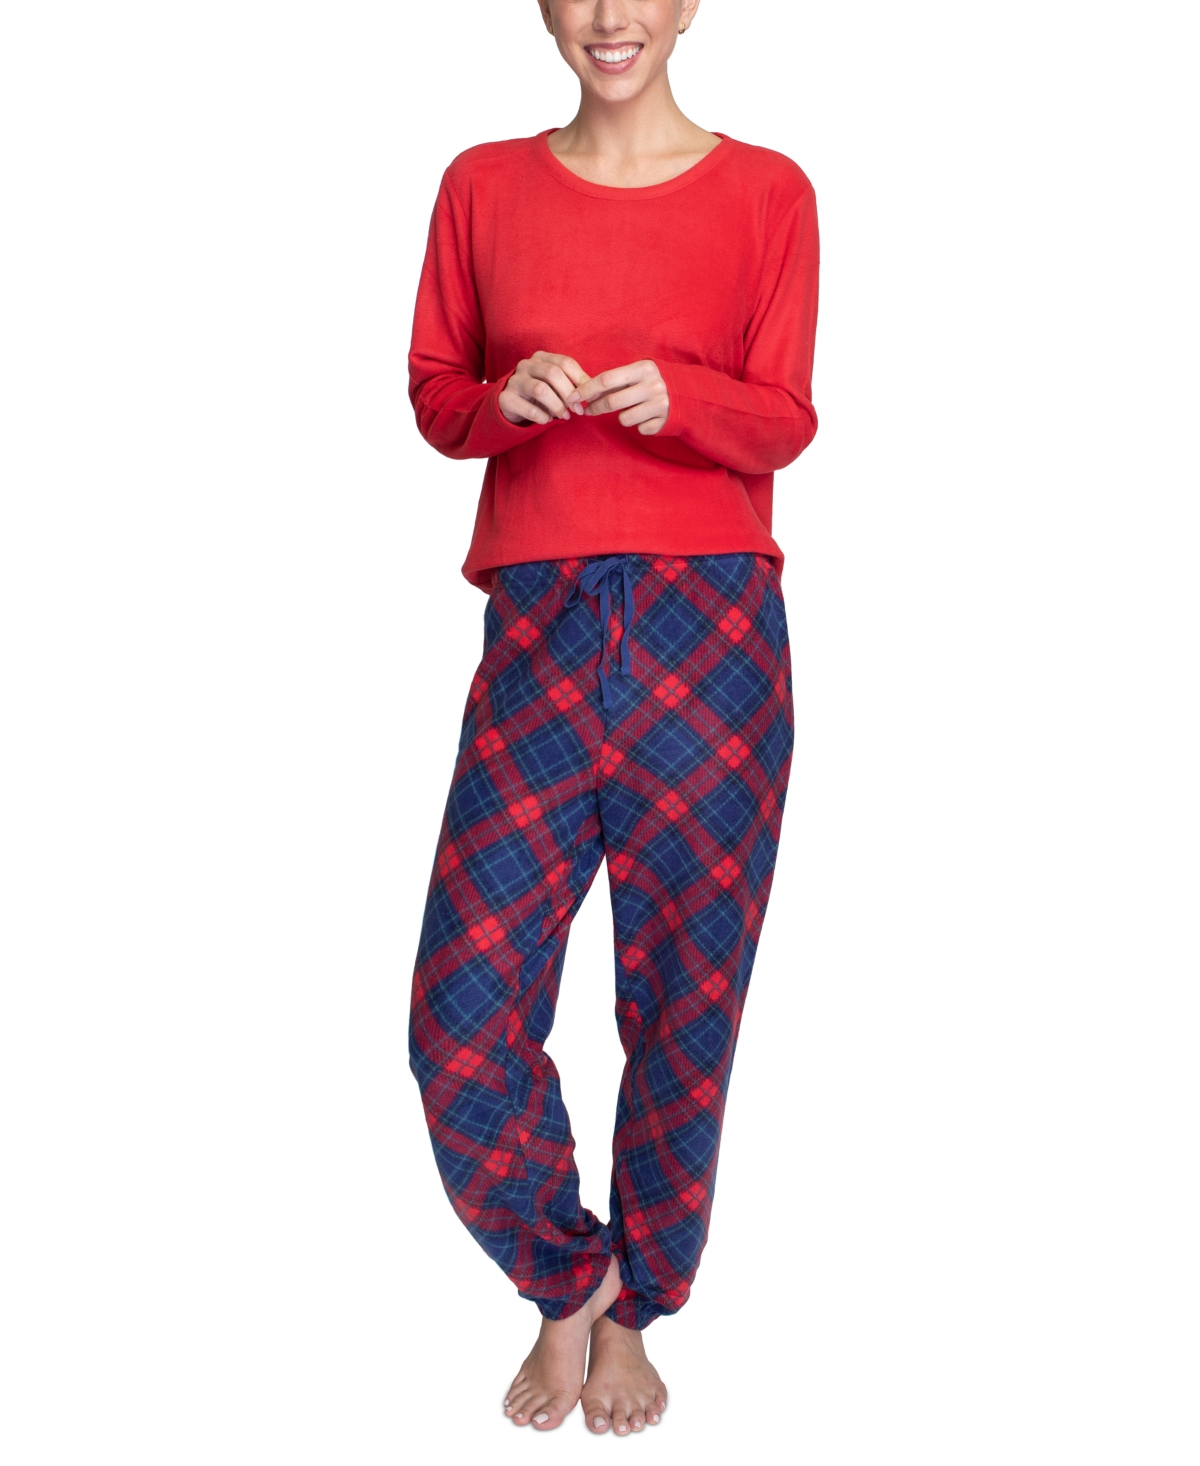 Hanes Women's Plus Size 2-pc. Stretch Fleece Pajamas Set In Red,tartan